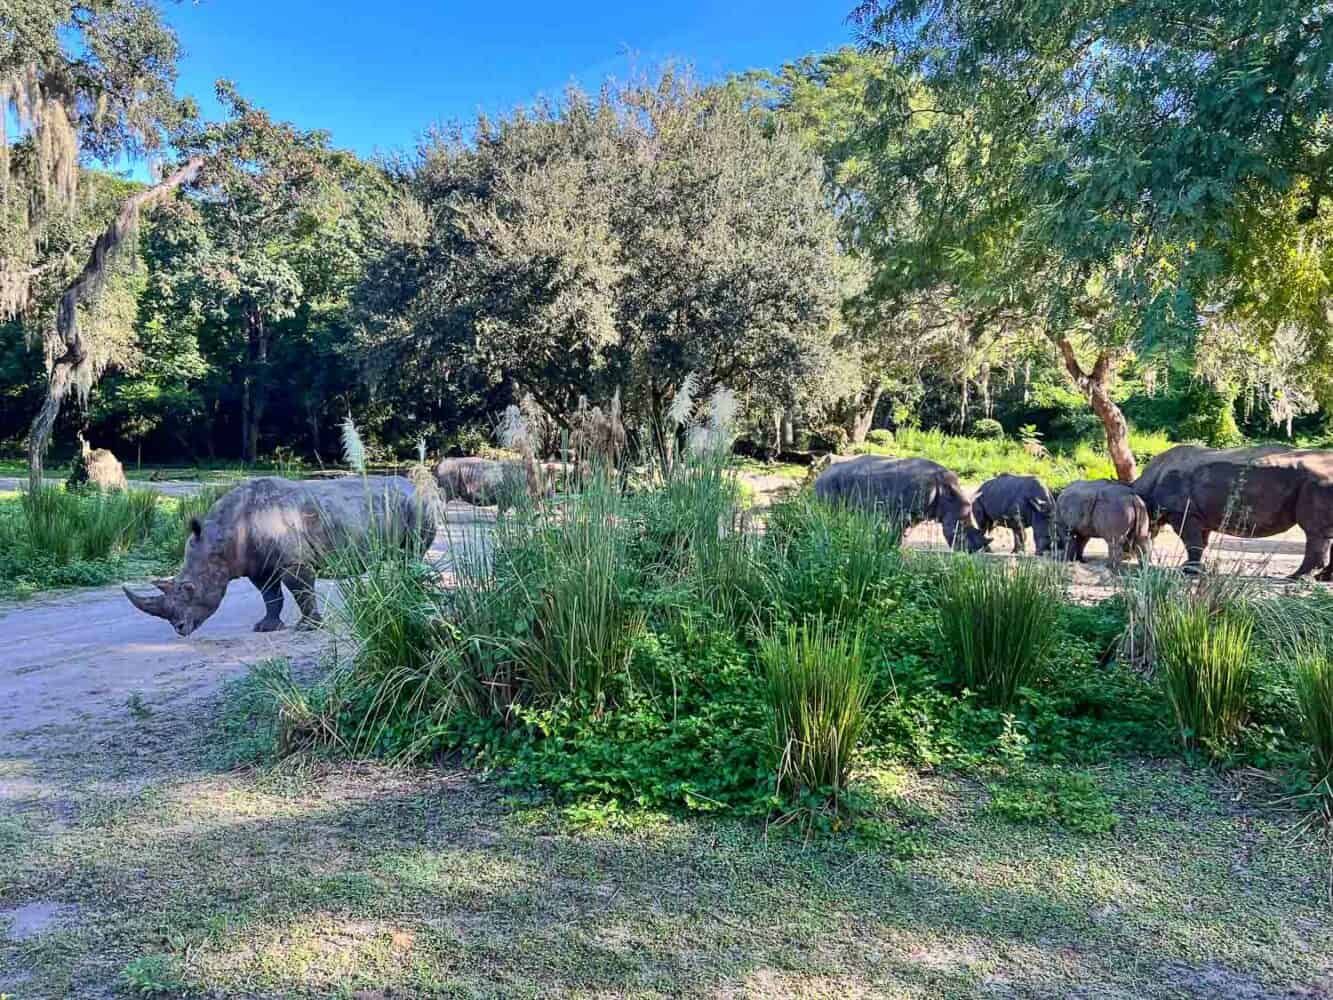 Rhinos on the Kilimanjaro Safaris, Animal Kingdom, Disney World